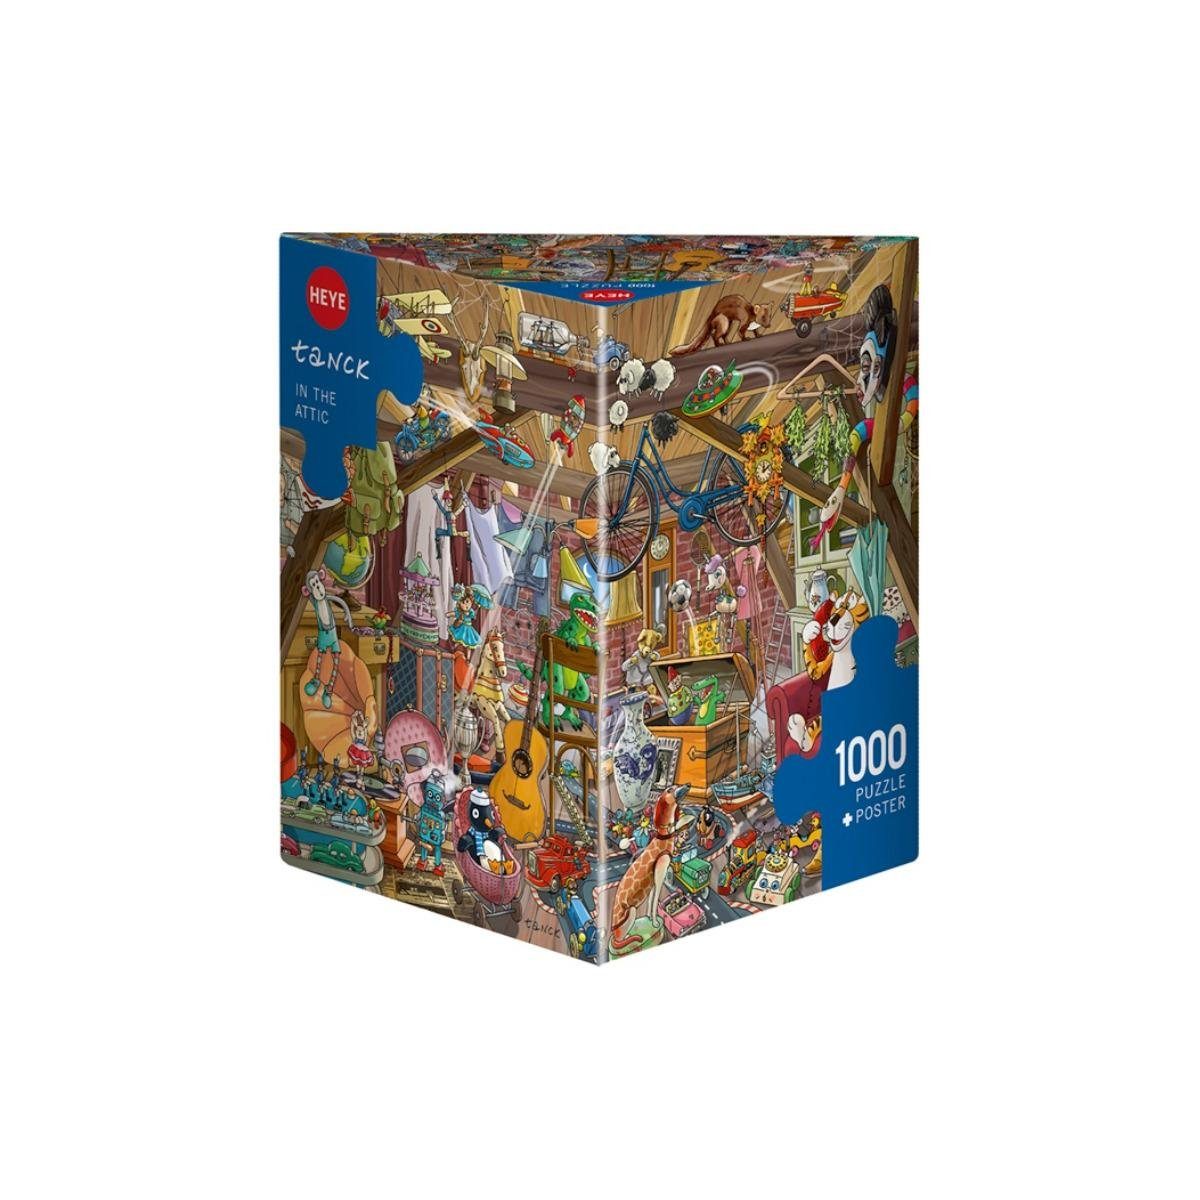 The Puzzle -..., im 1000 HEYE 298852 - Puzzleteile Teile 1000 Attic, Cartoon Dreieck, In